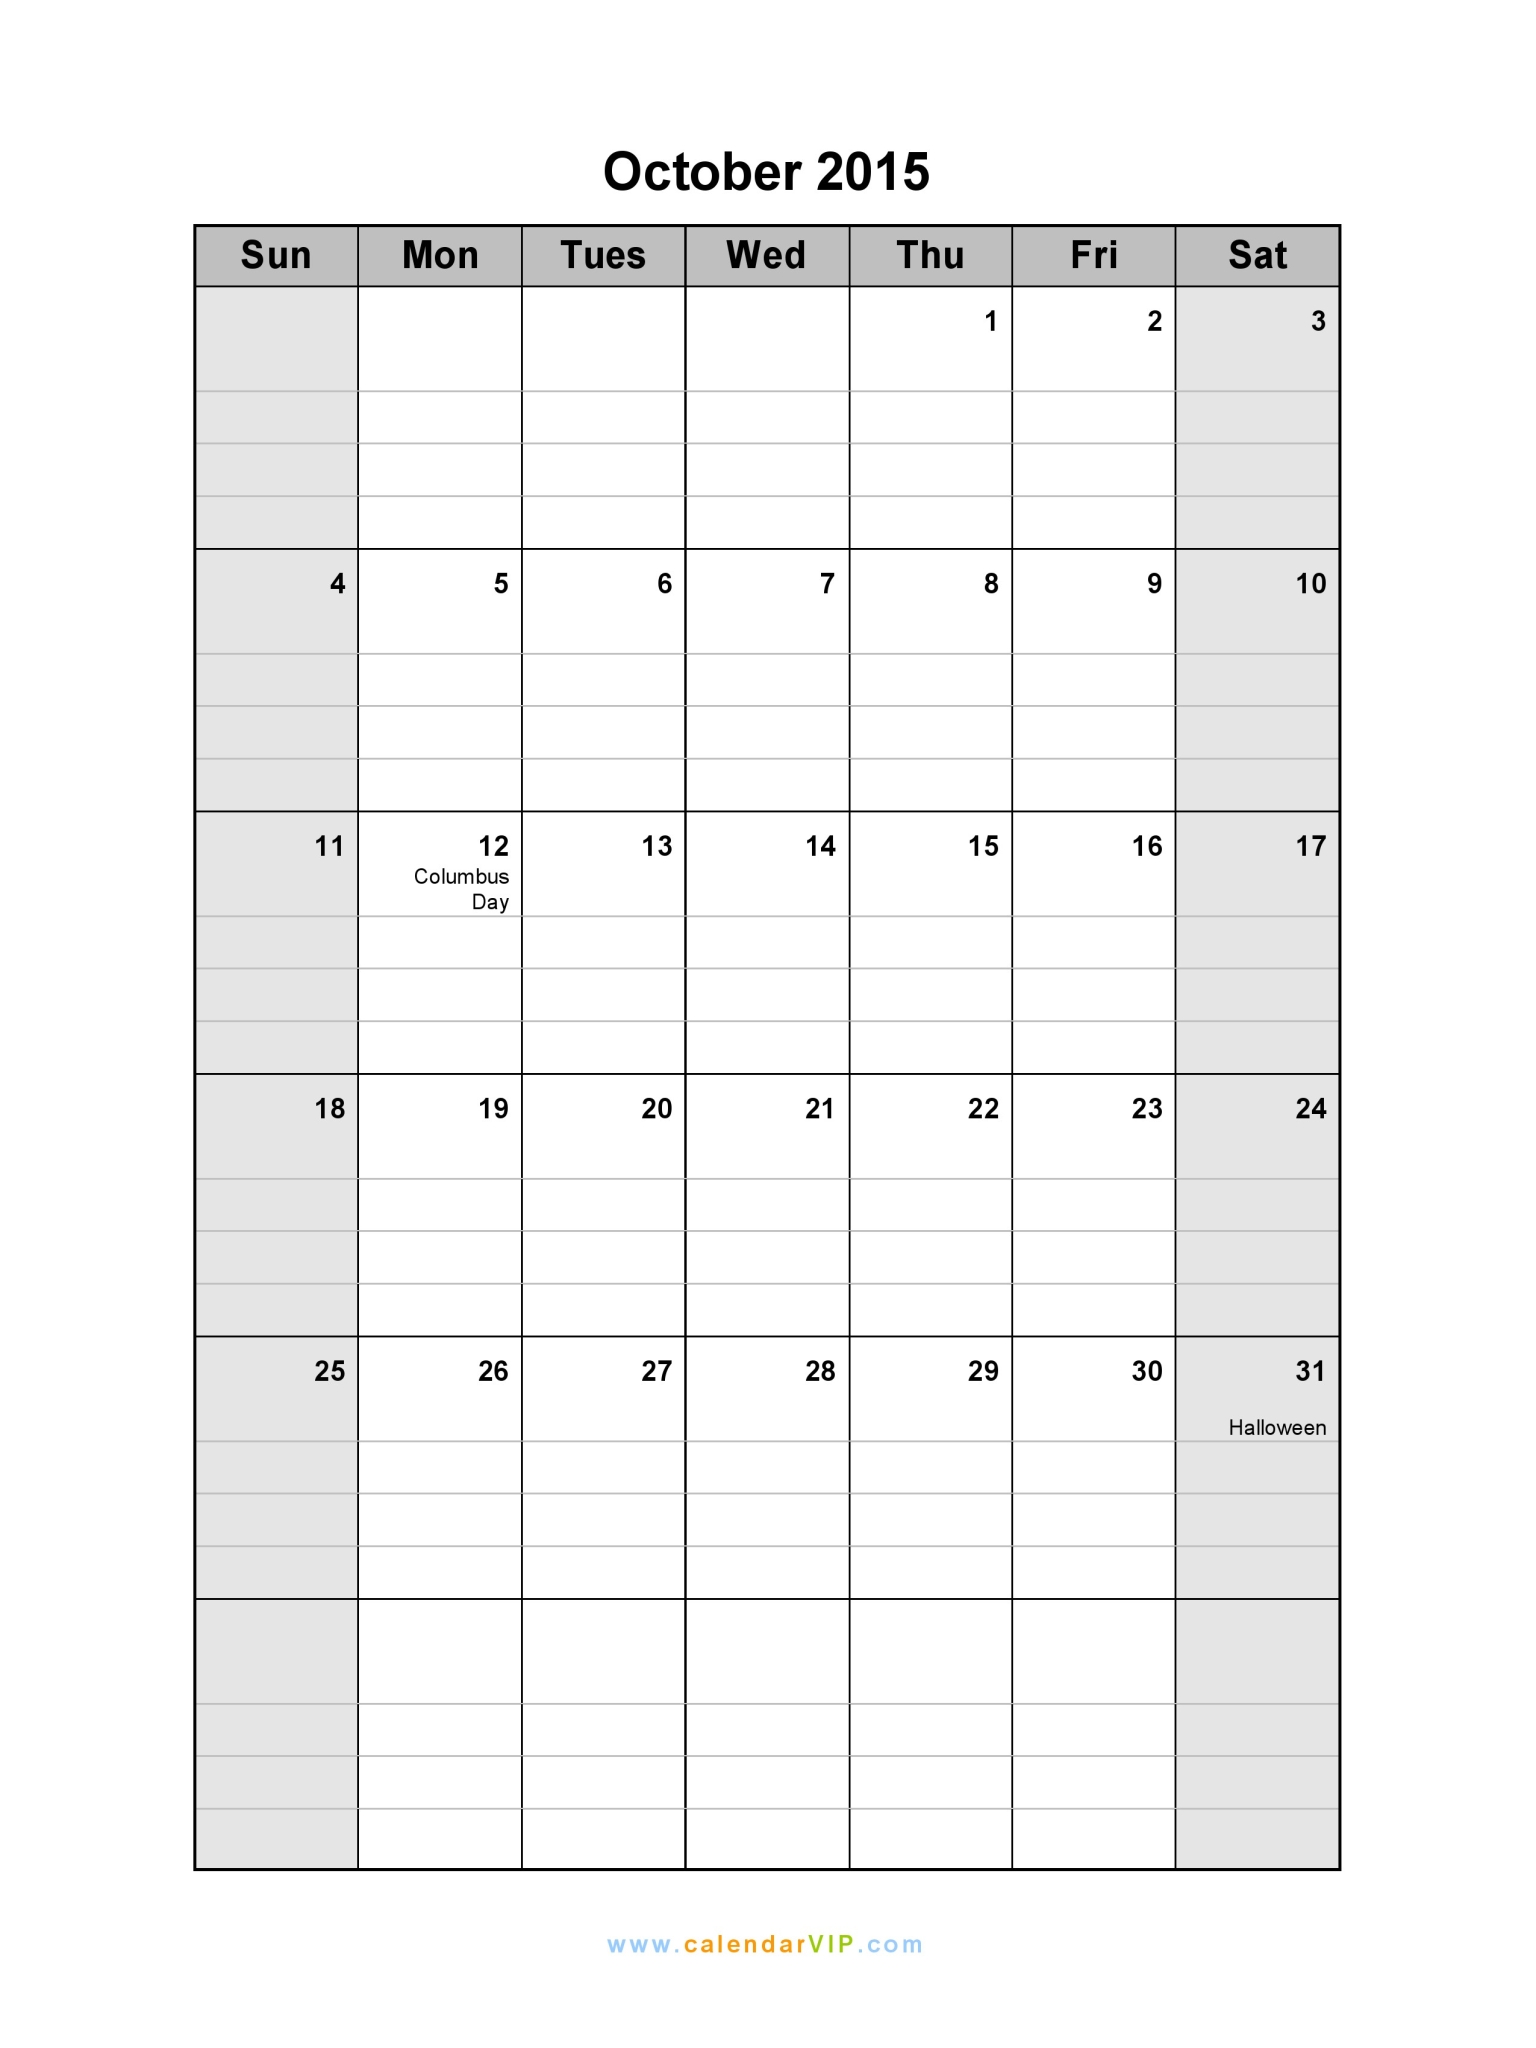 October 2015 Calendar - Blank Printable Calendar Template in PDF Word Excel